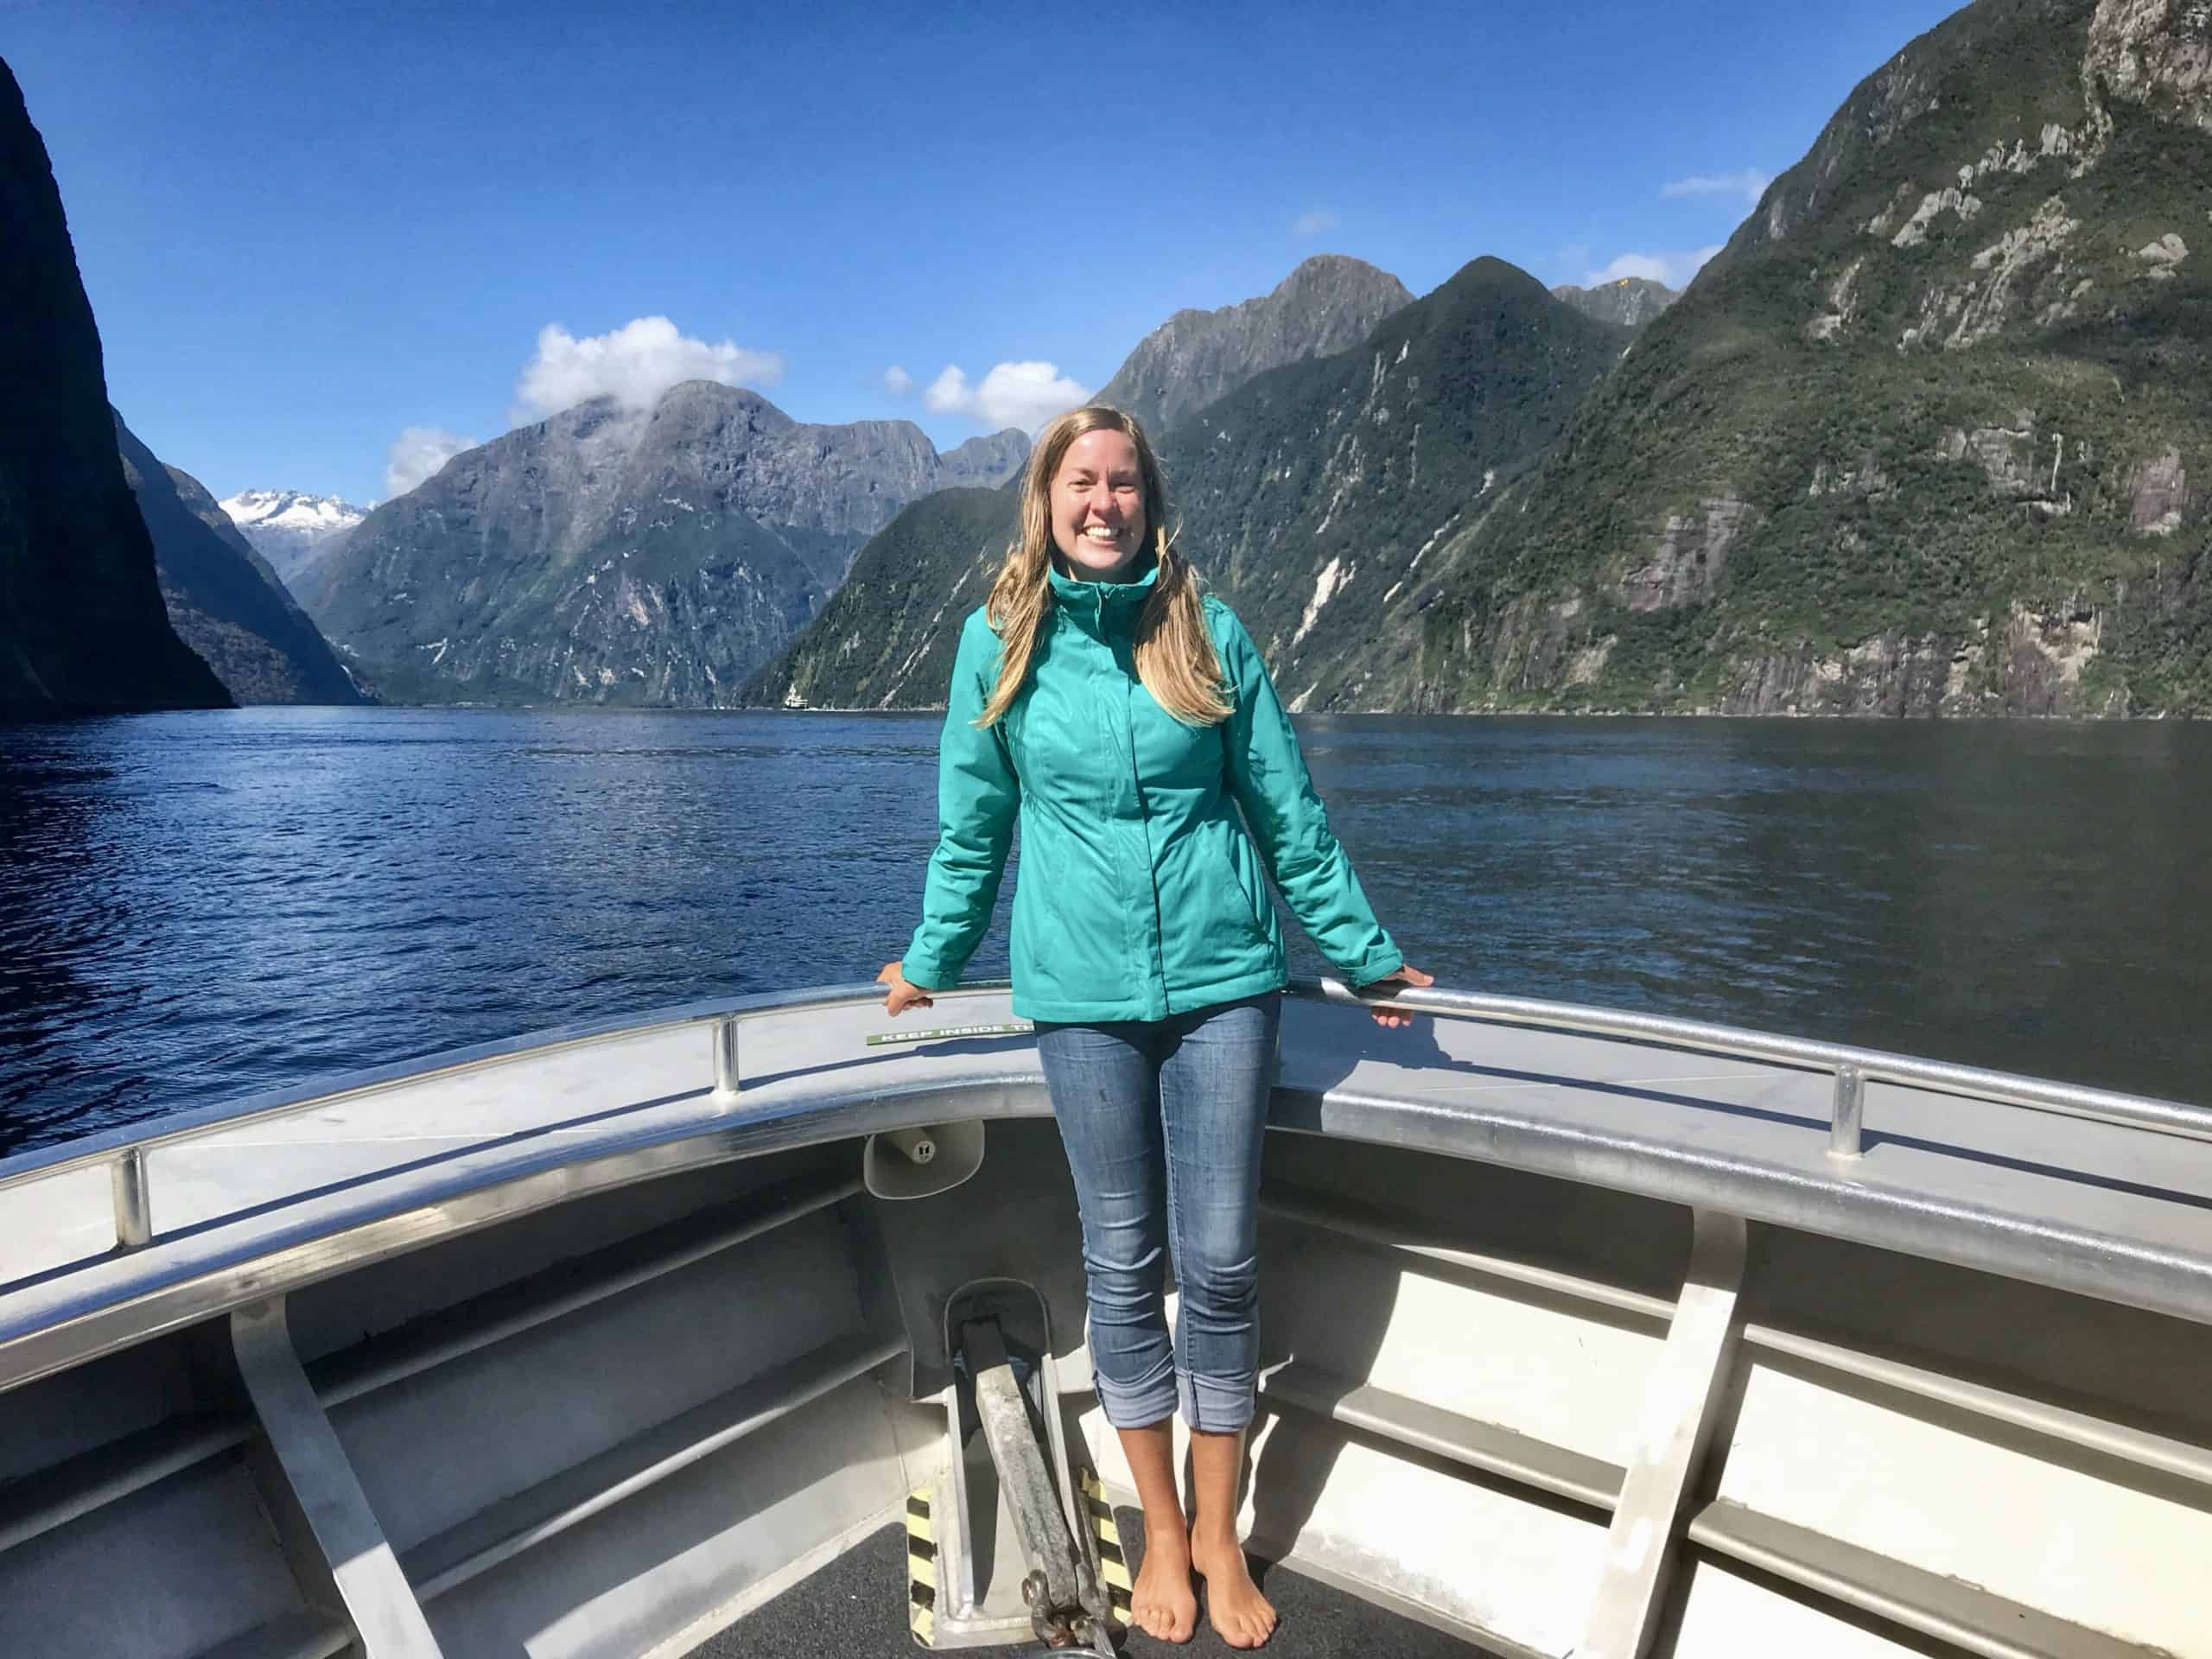 Joannda on a boat cruise on Milford Sound in Fiordland